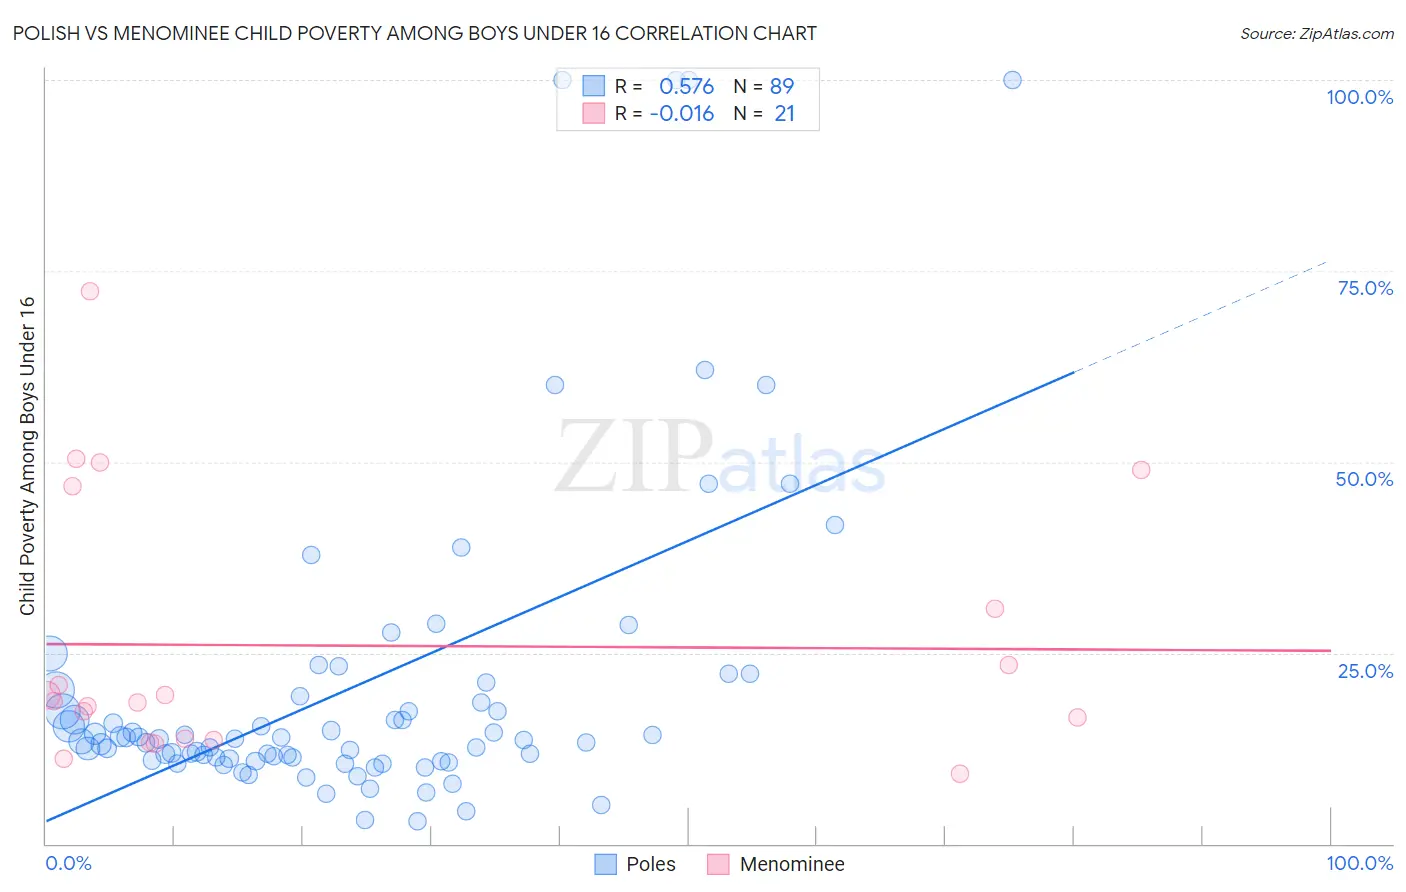 Polish vs Menominee Child Poverty Among Boys Under 16